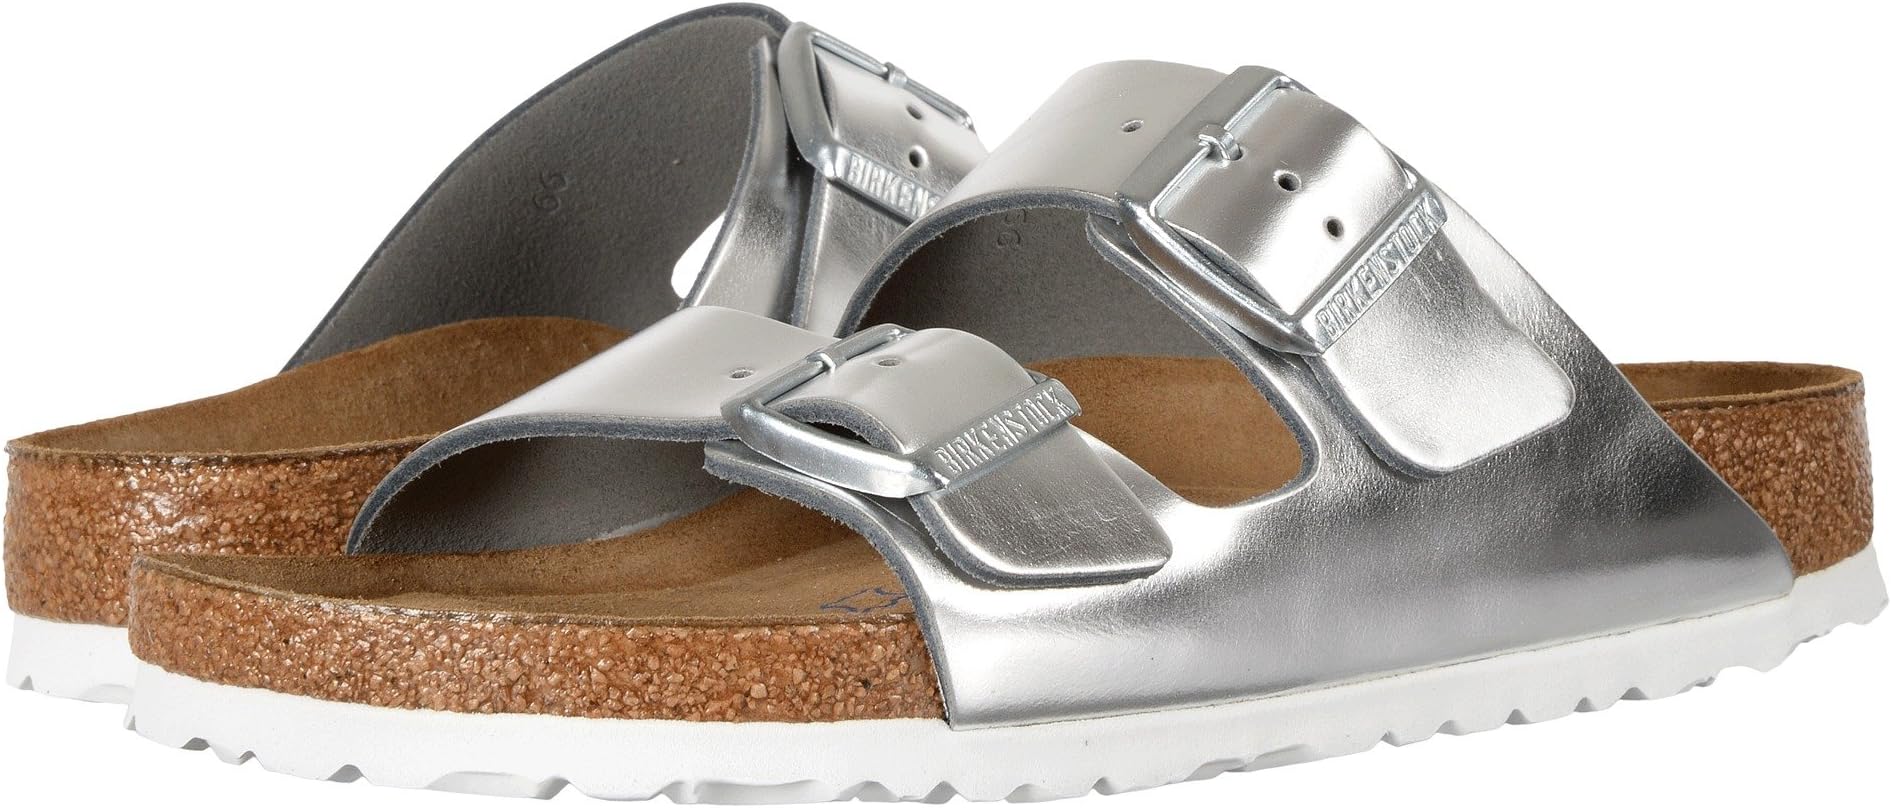 Сандалии на плоской подошве Arizona Soft Footbed - Metallic Leather Birkenstock, цвет Metallic Silver Leather 1